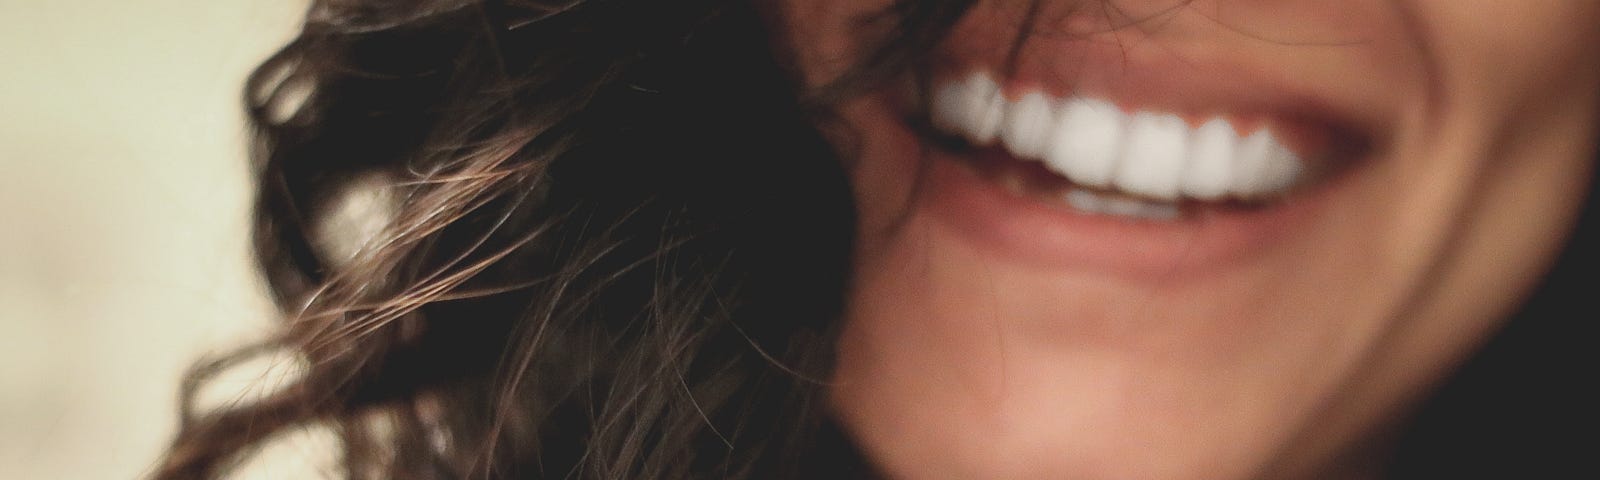 Closeup of woman smiling.